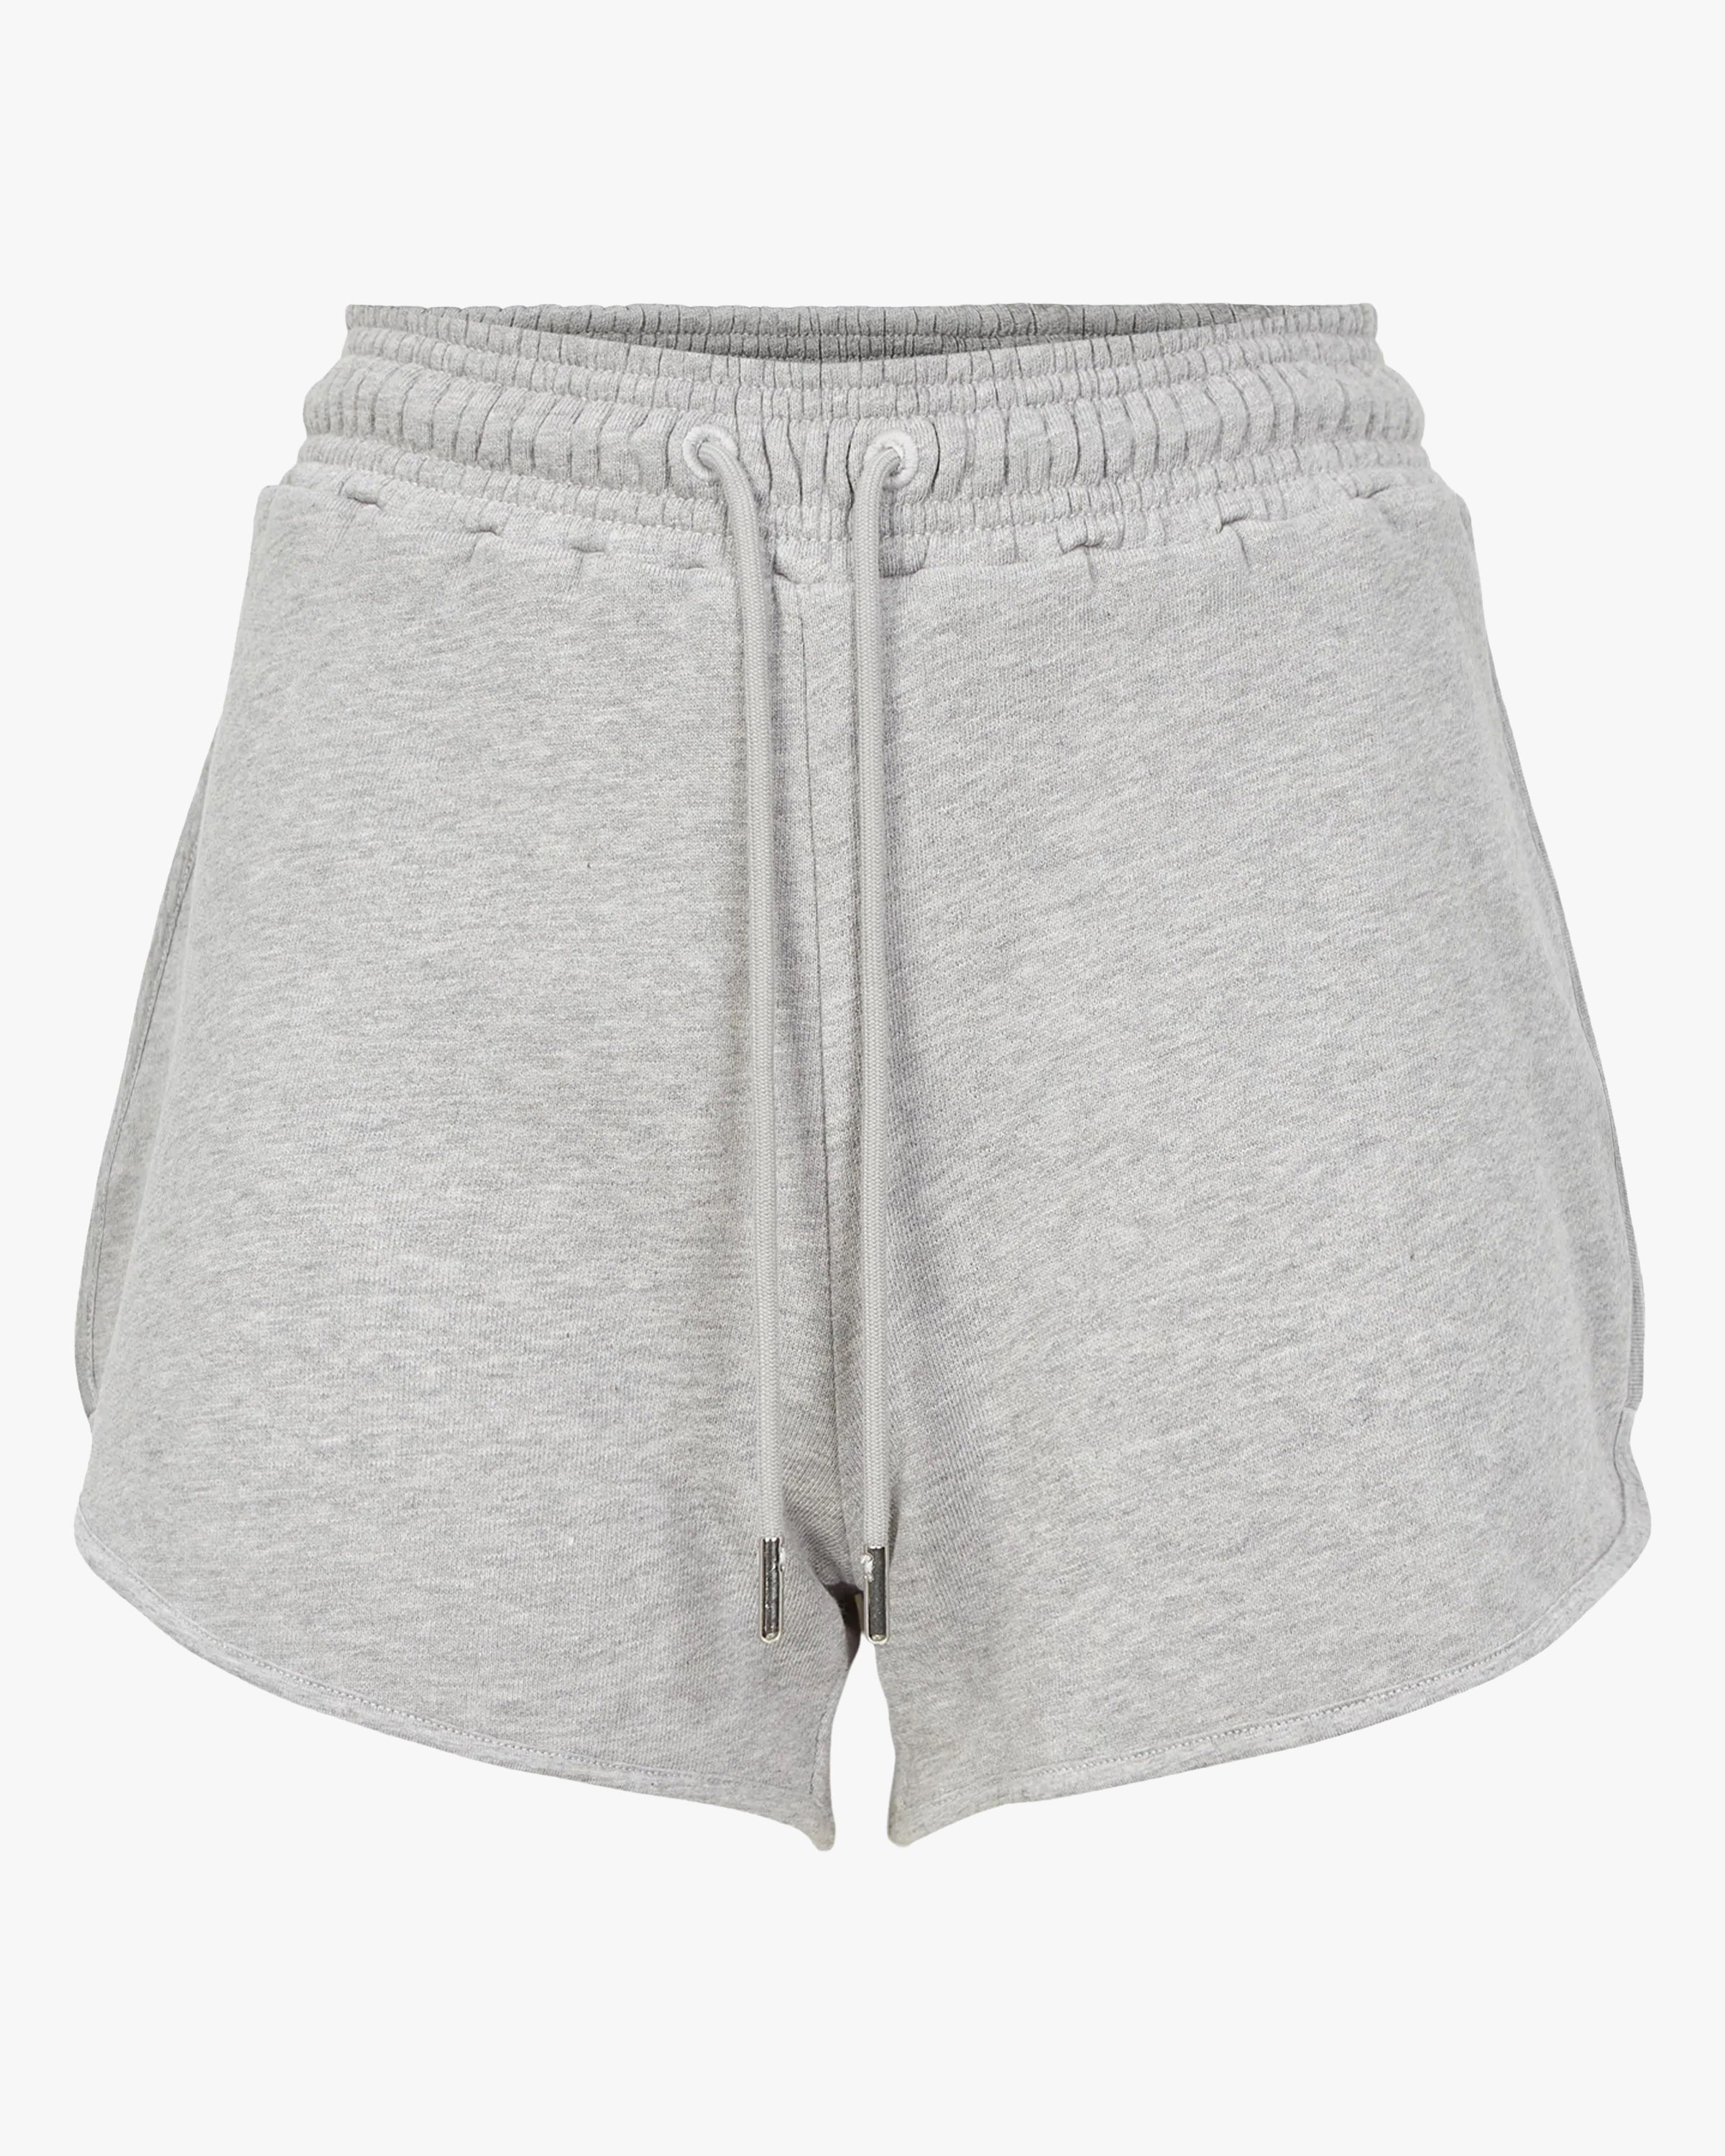 Ninety Percent Lyla Shorts in Grey Marl